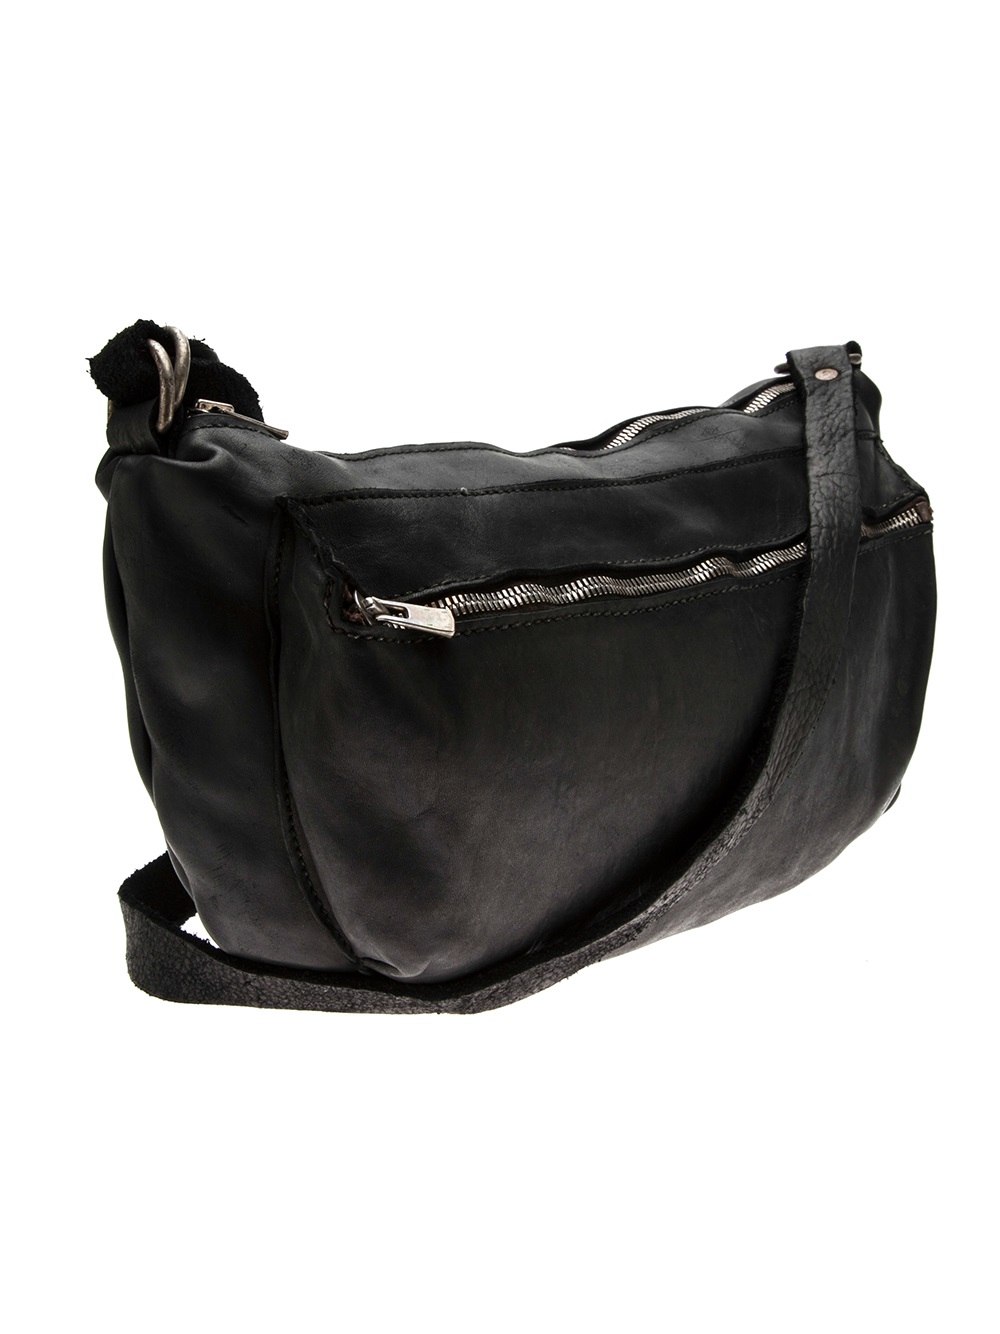 Lyst - Guidi Double Zipper Small Bag in Black for Men